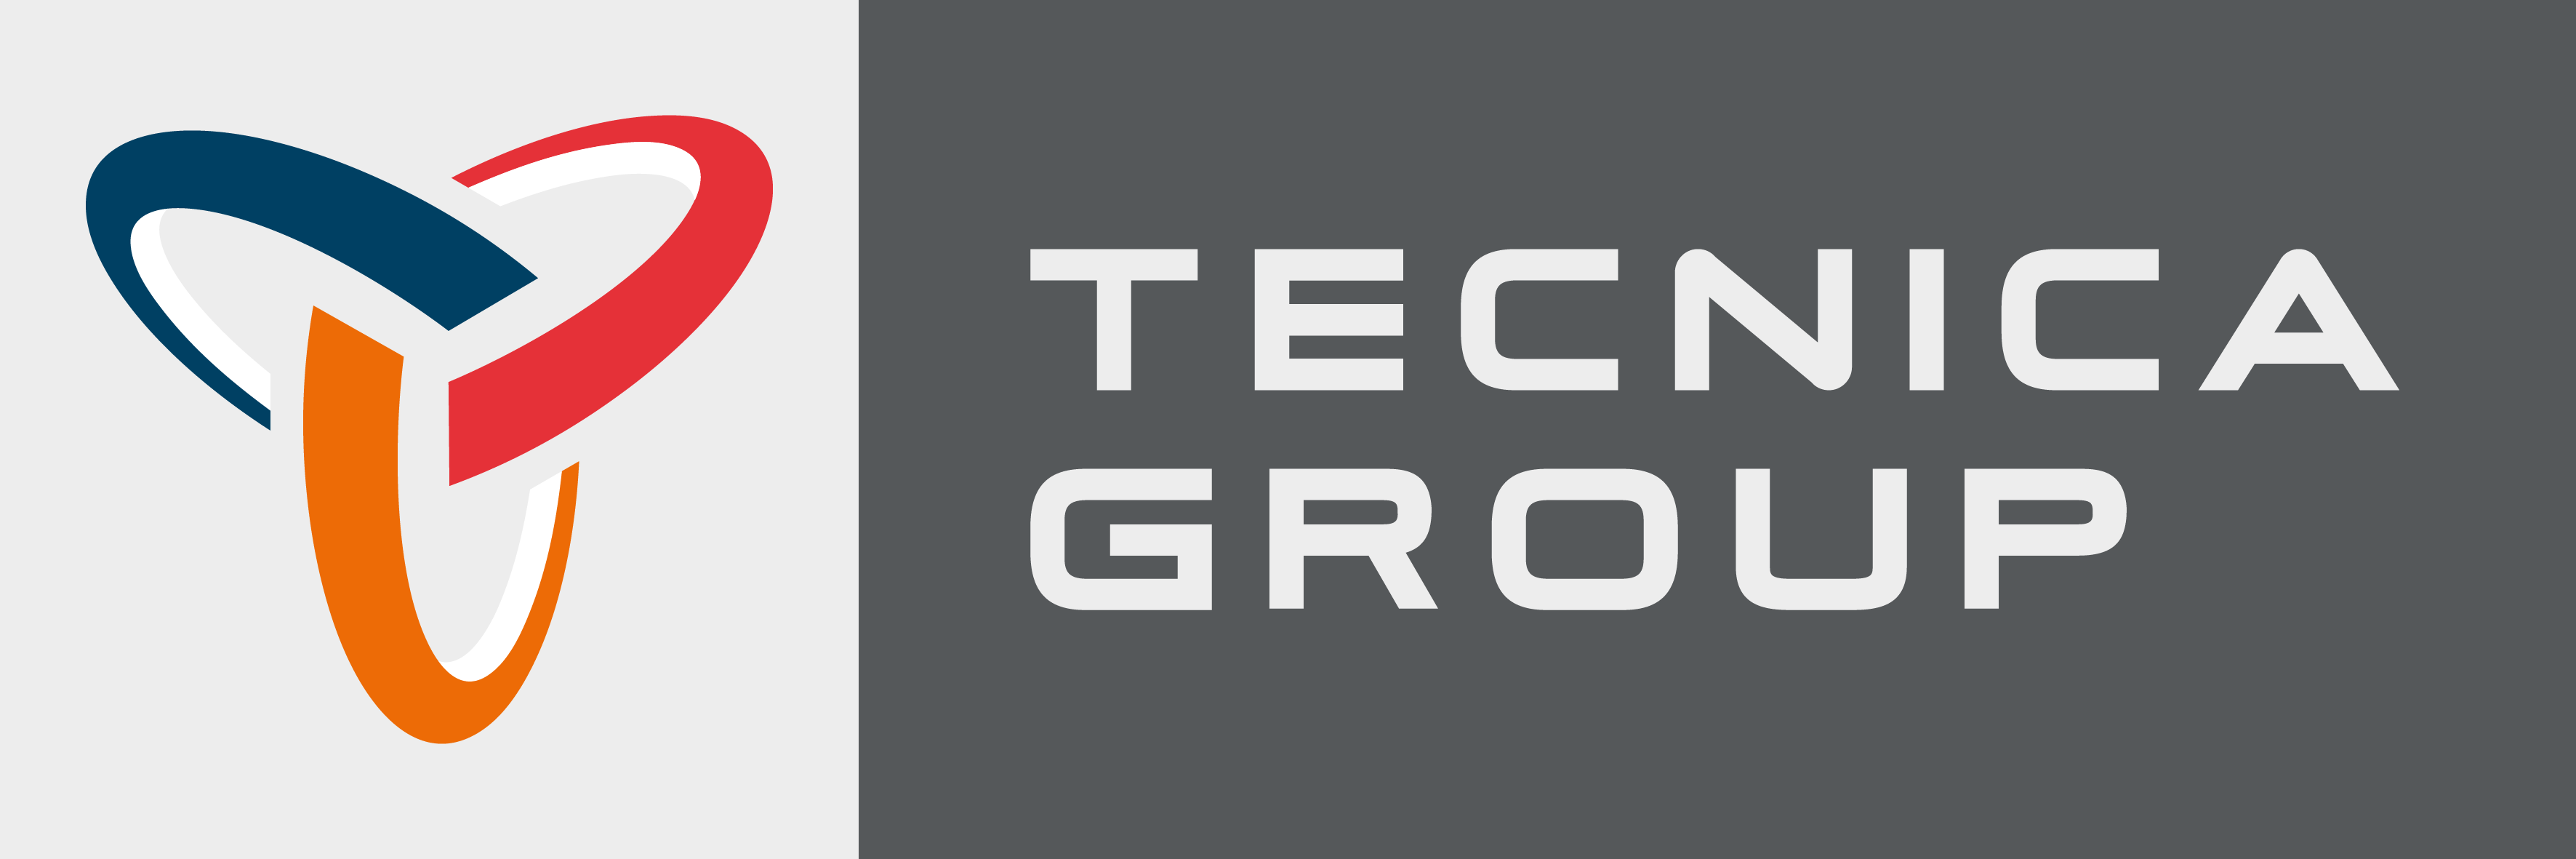 Tecnica Group s.p.a.